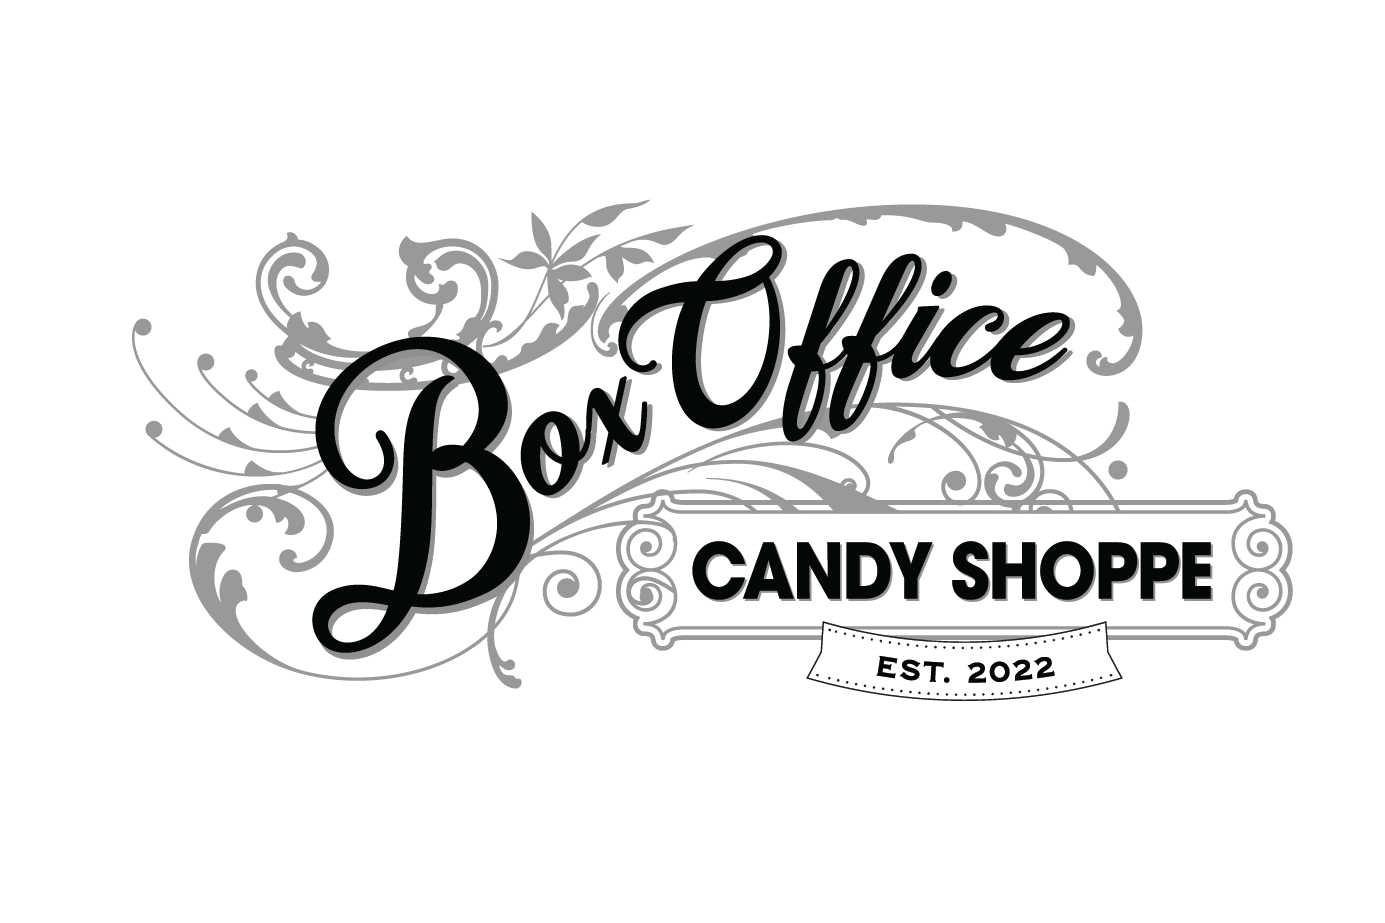 Box Office Candy Shoppe Canby Minnesota